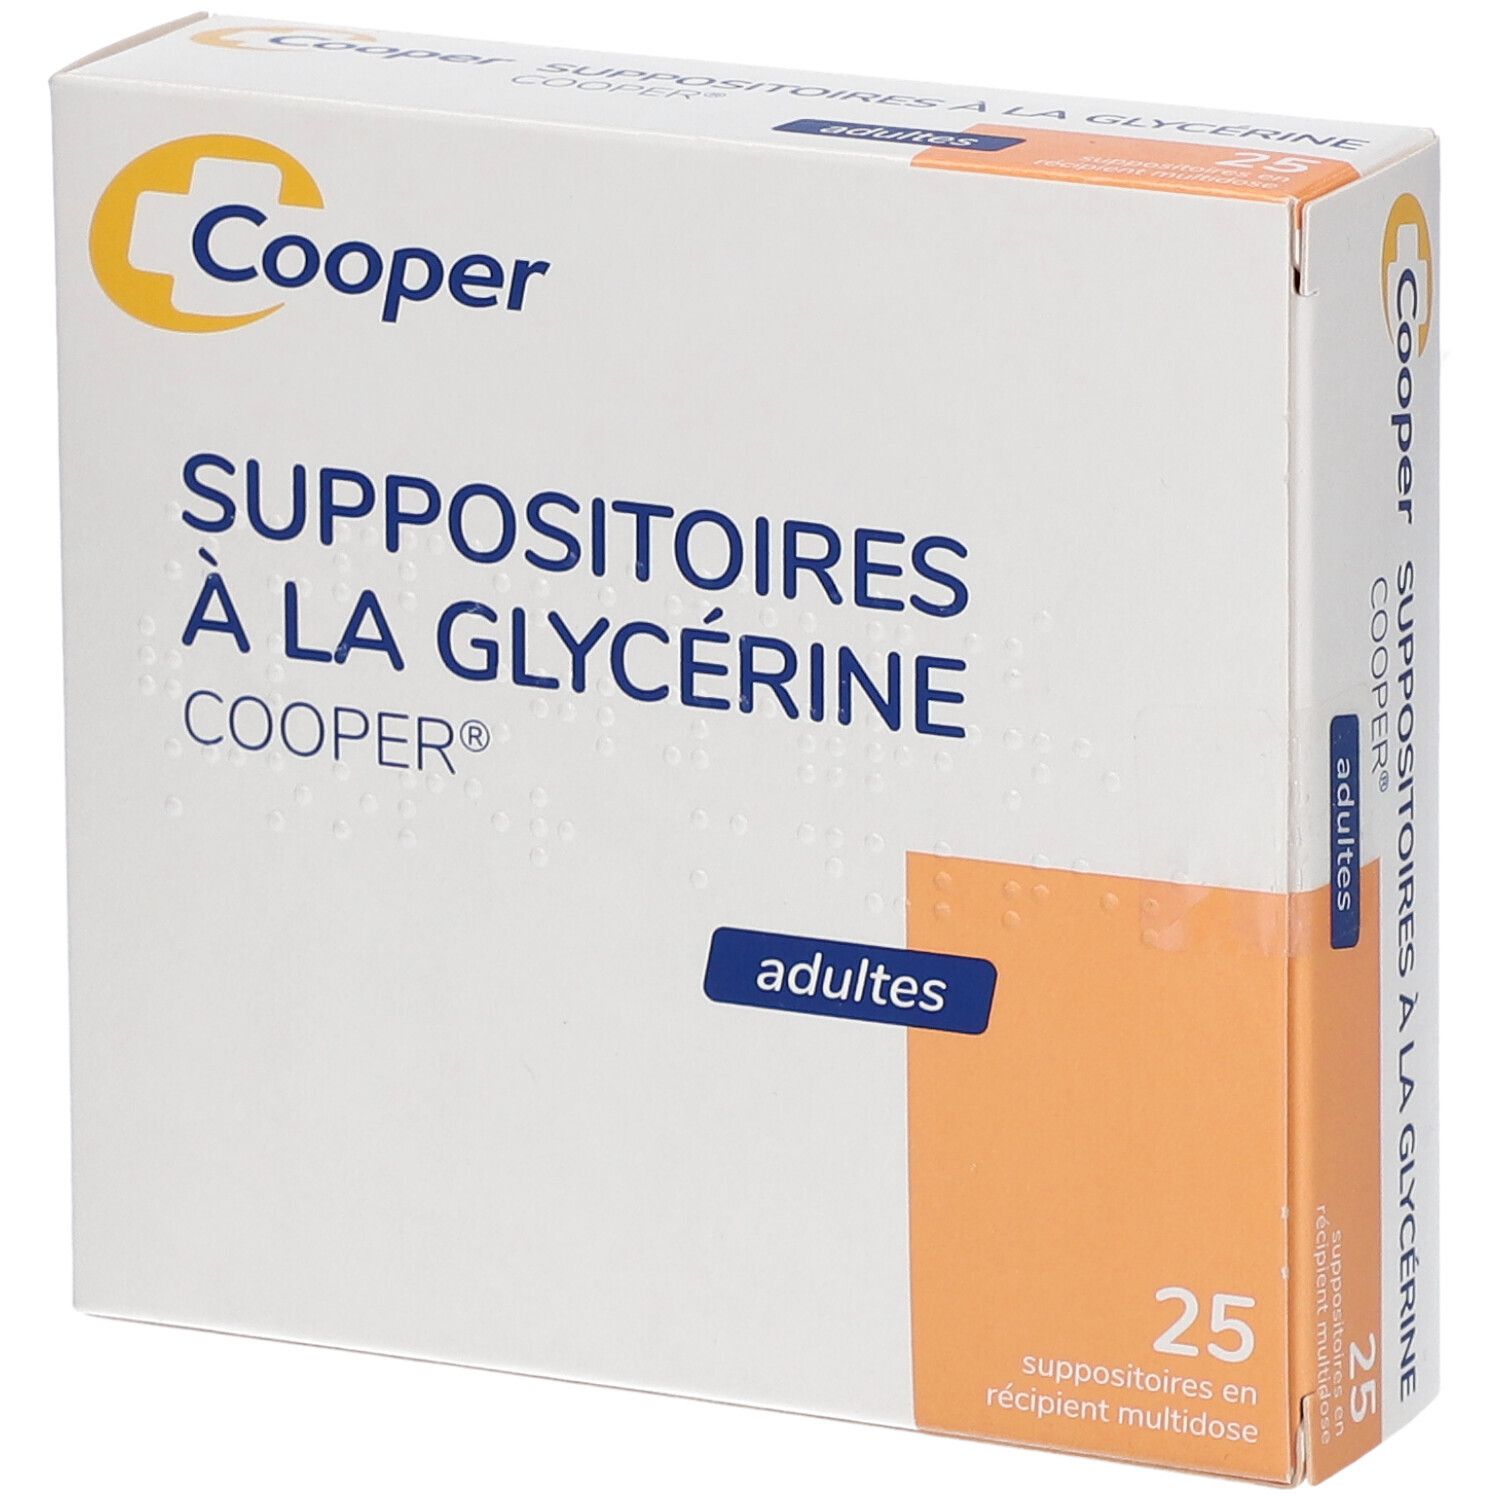 Suppositoire à la glycérine gifrer 25 suppositoires - Pharmacie Cap3000